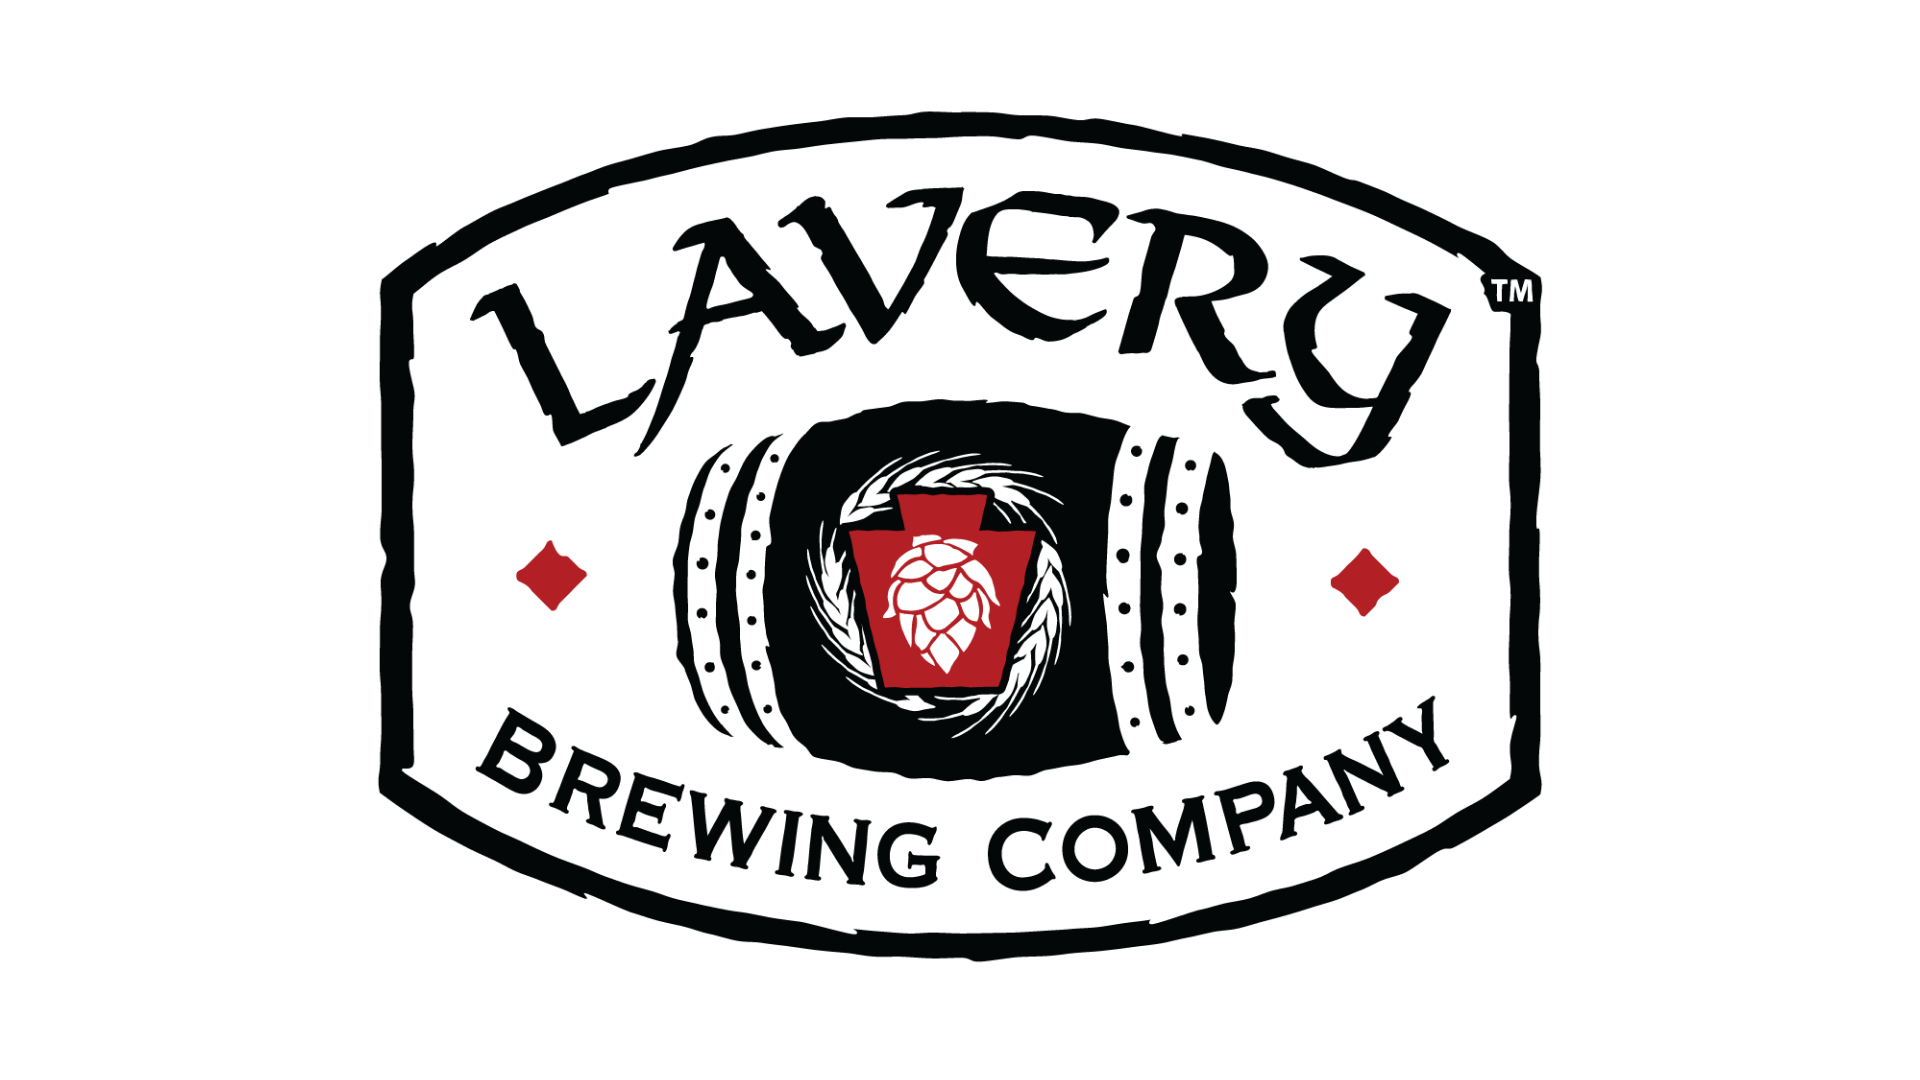 Lavery Sponsor Logo